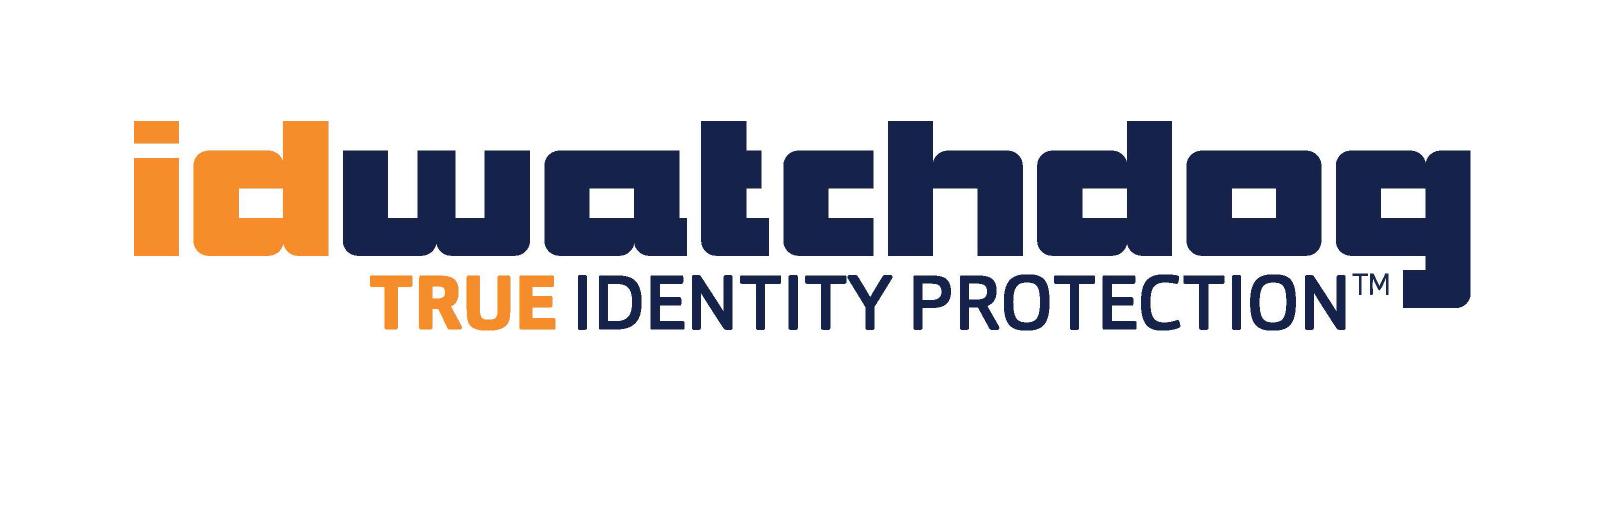 idwatchdog true identity protection